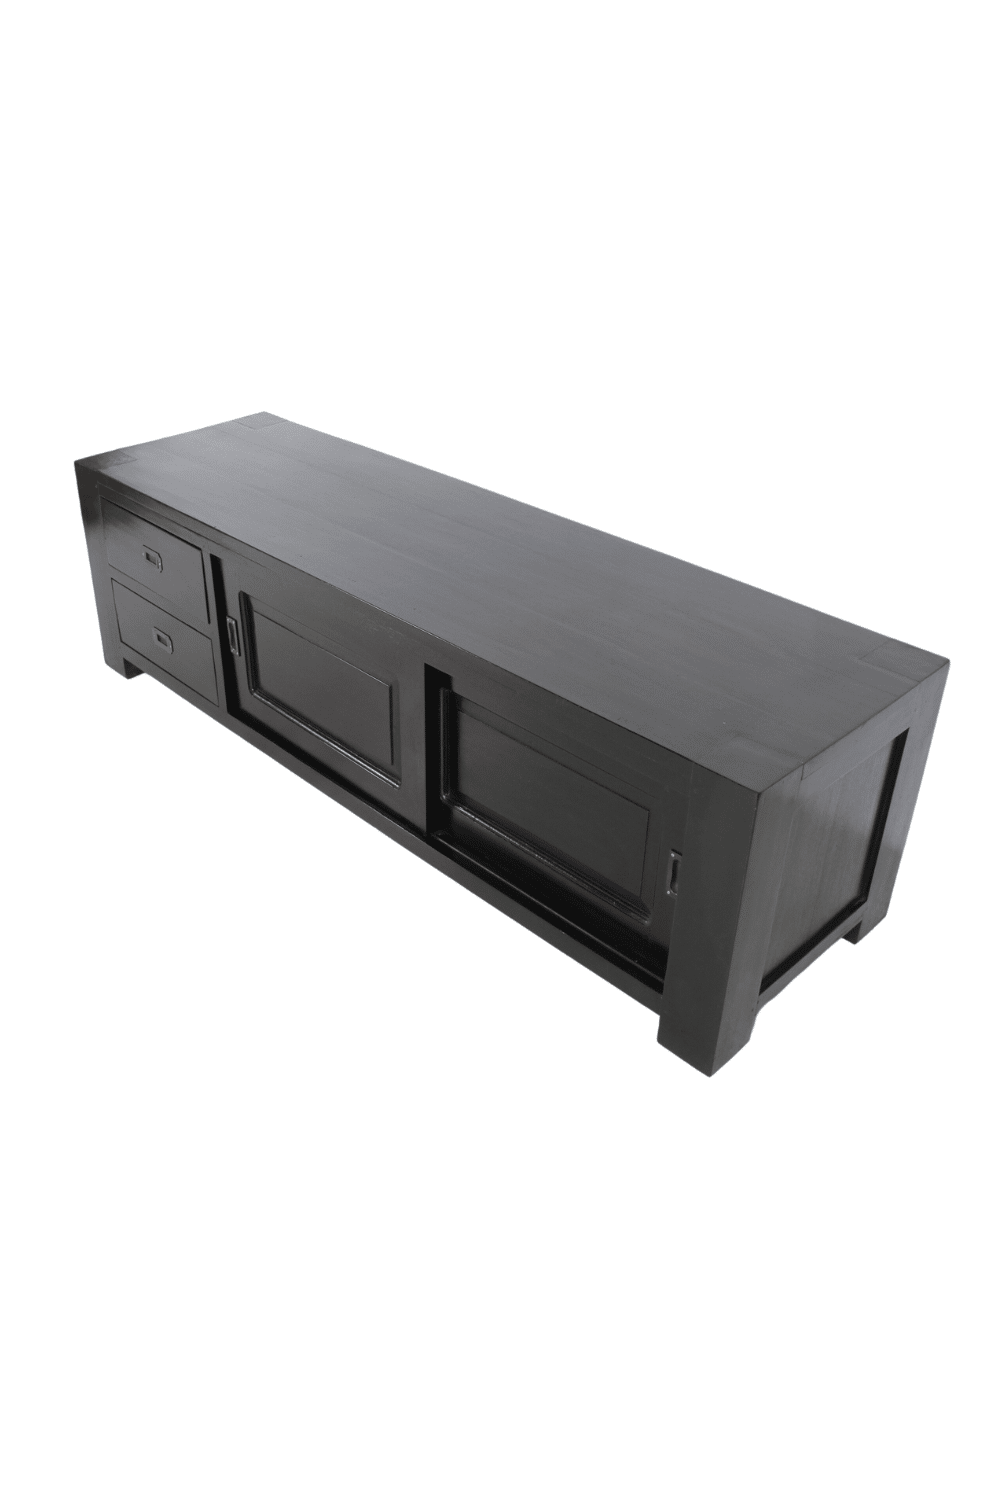 zwart Soer tv meubel 170 cm